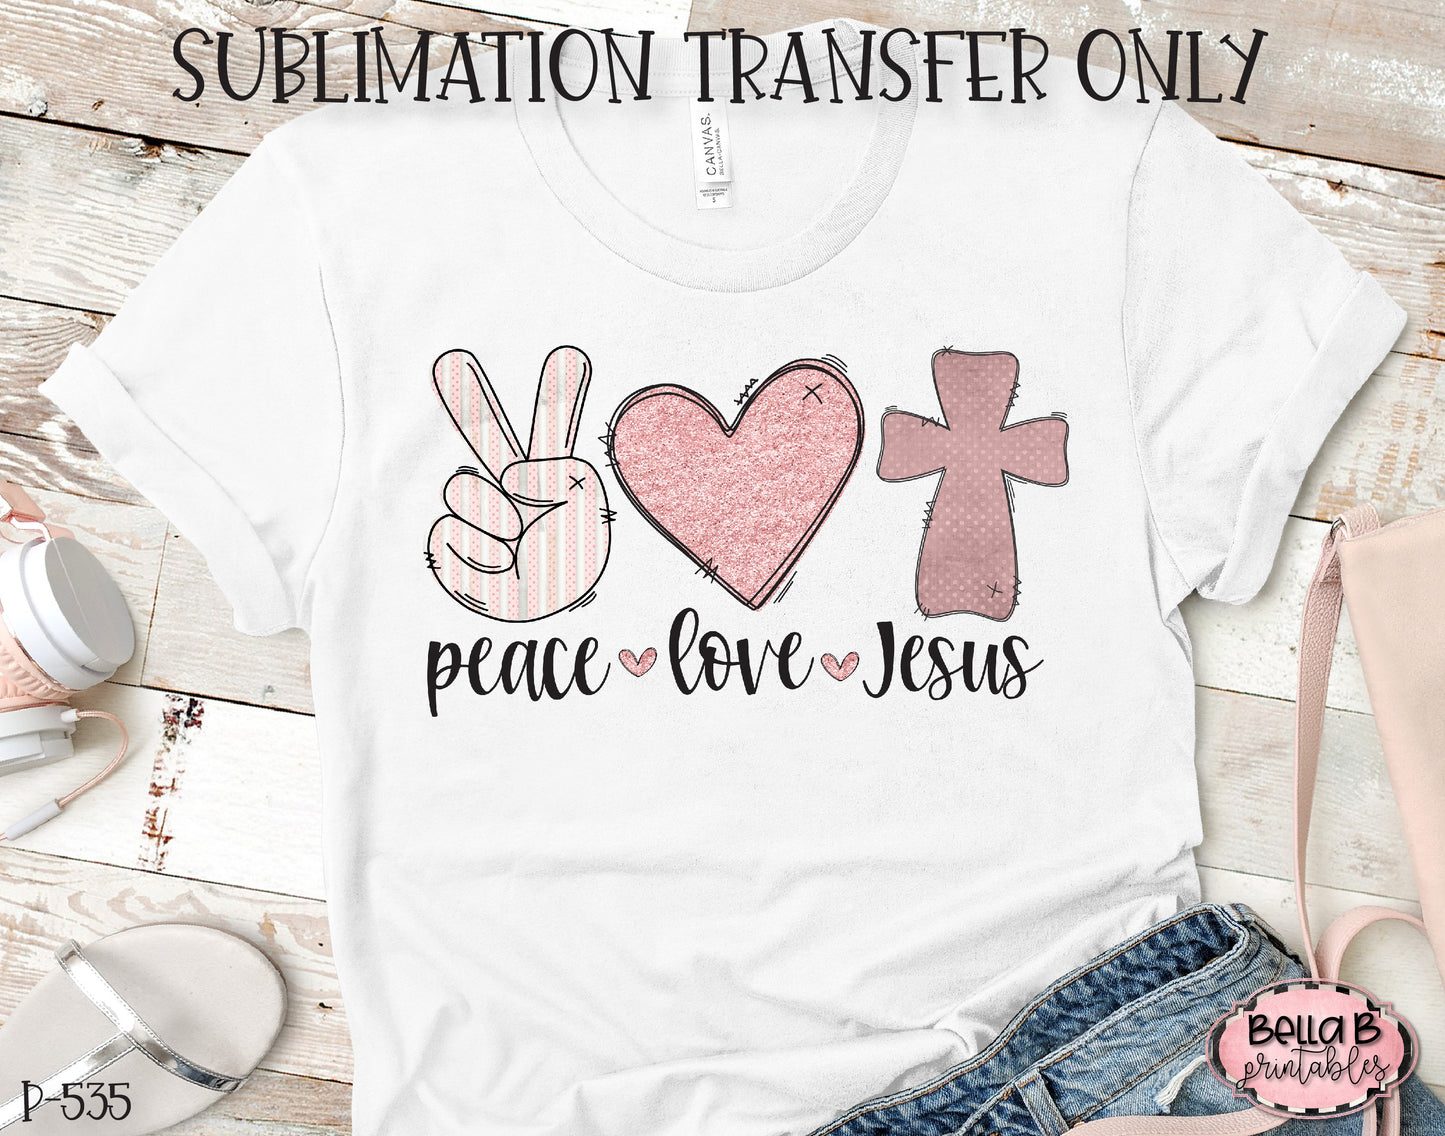 Peace Love Jesus Sublimation Transfer, Ready To Press, Heat Press Transfer, Sublimation Print